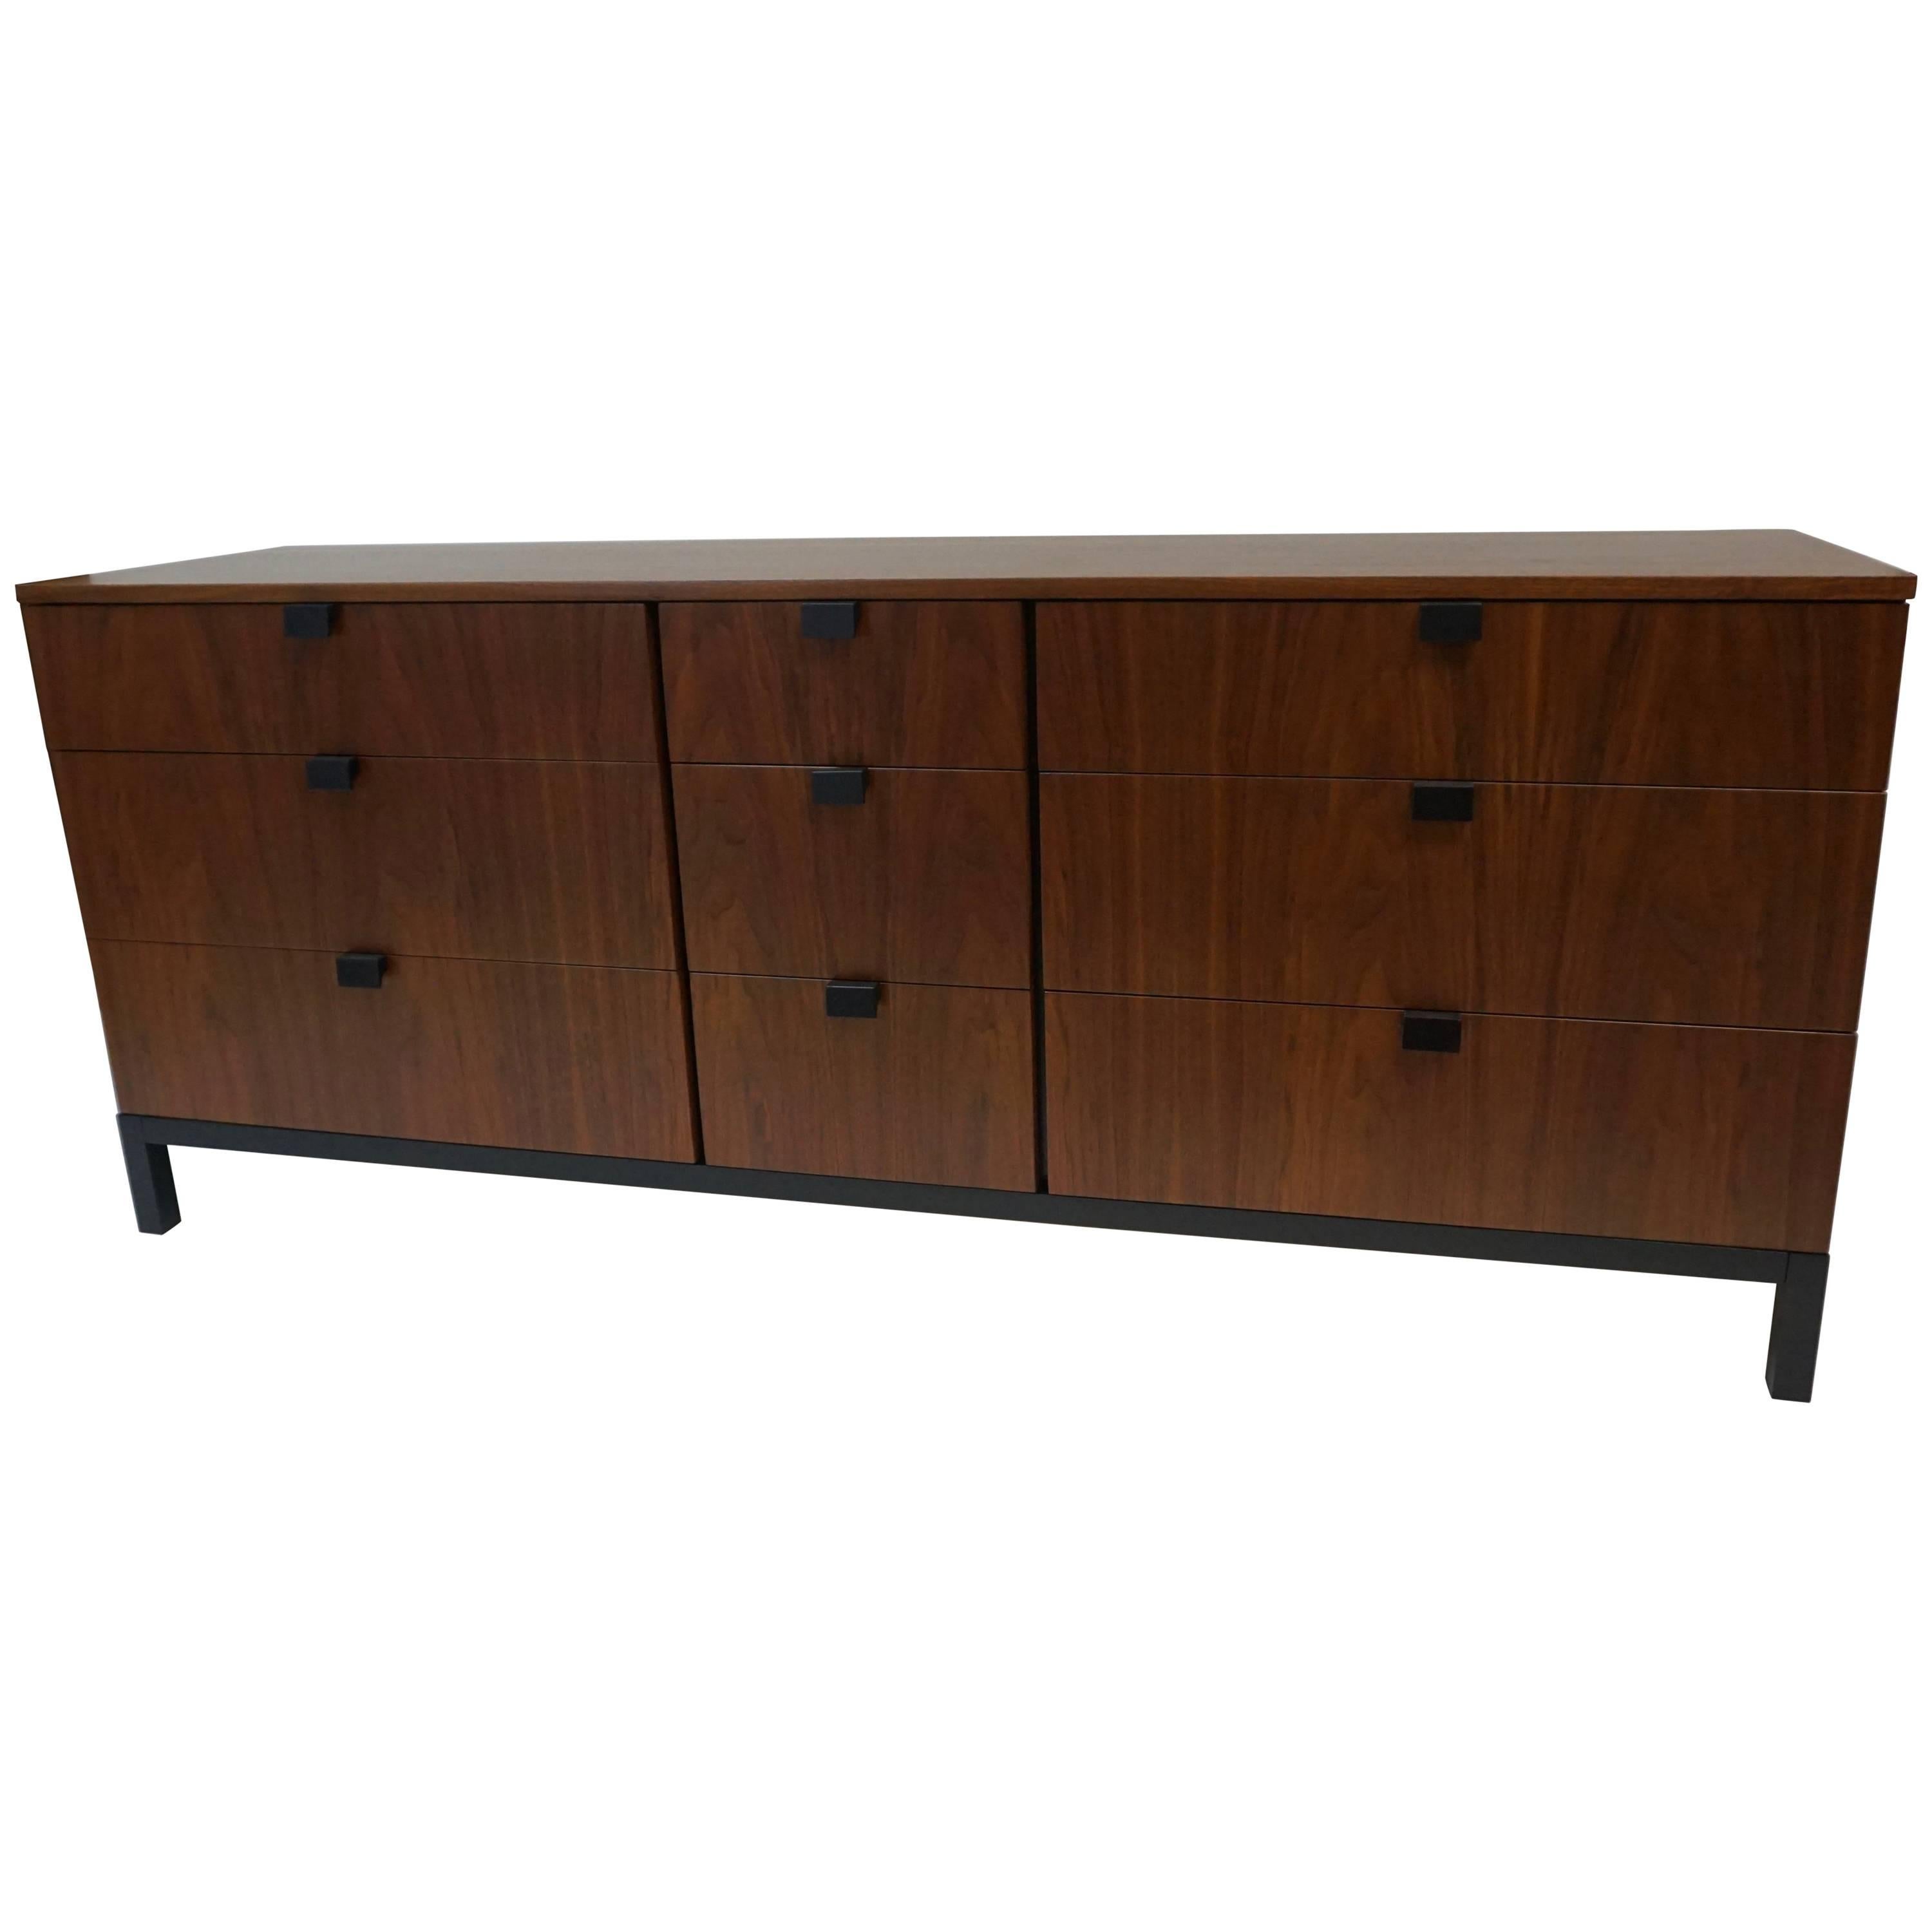 1950 Milo Baughman Dresser for Directional For Sale